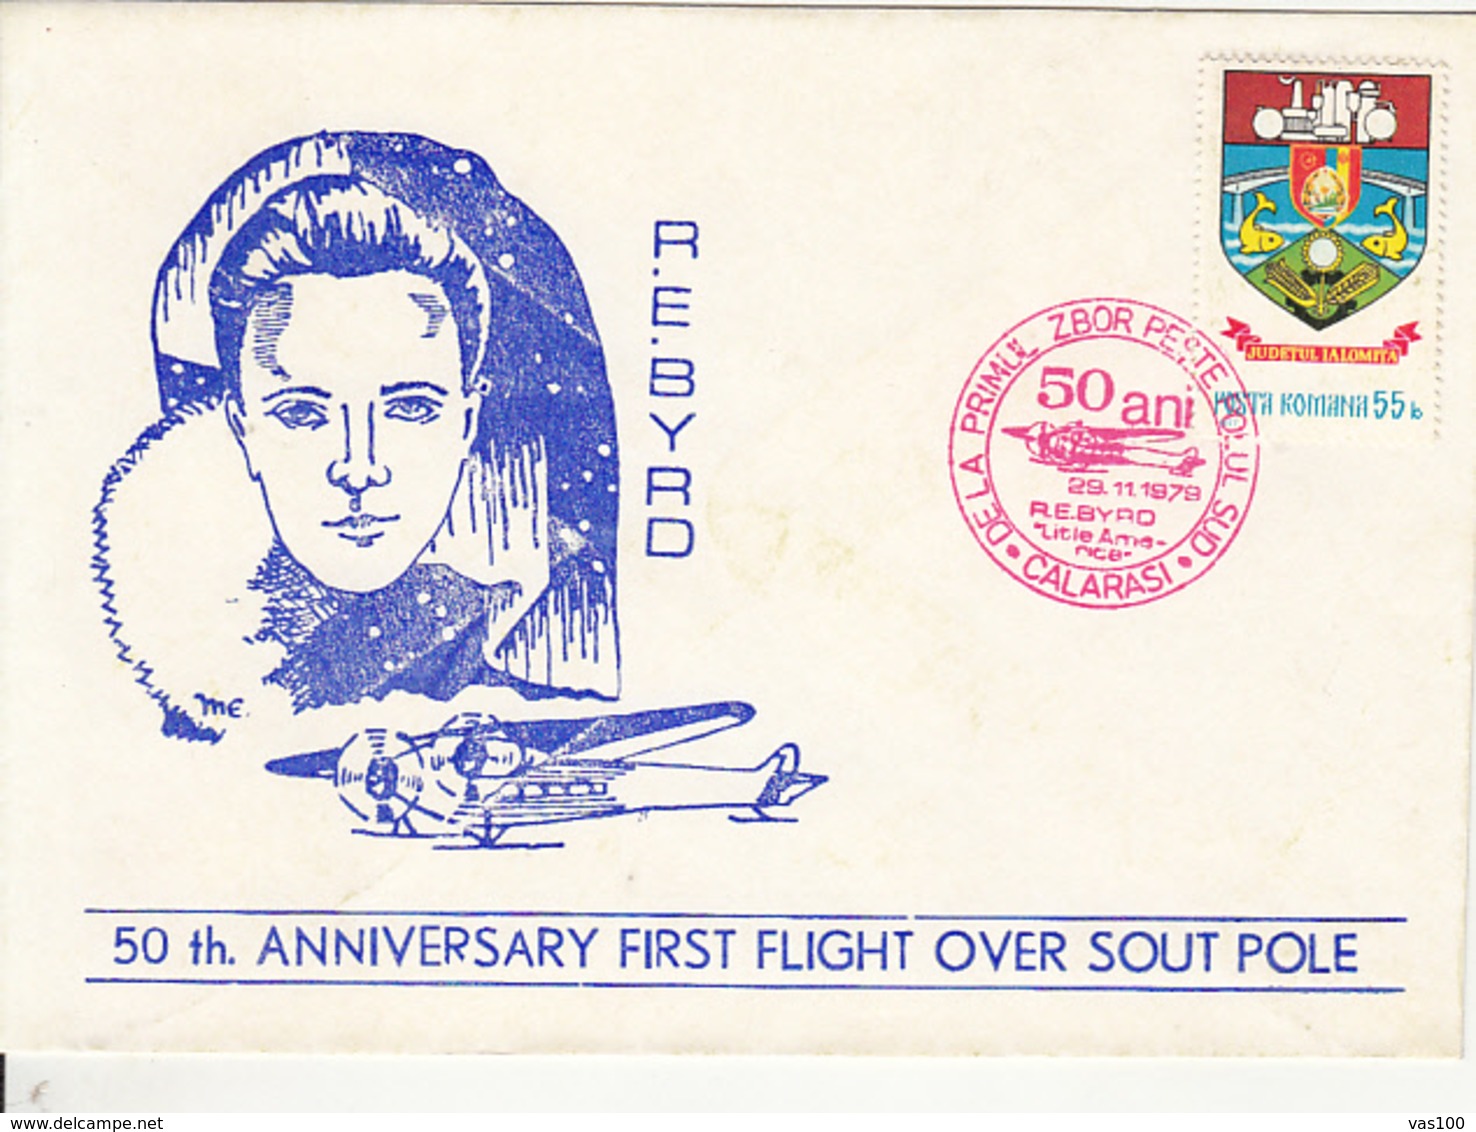 POLAR FLIGHTS, RICHARD E. BYRD FIRST FLIGHT OVER SOUTH POLE, PLANE, SPECIAL COVER, 1979, ROMANIA - Polar Flights